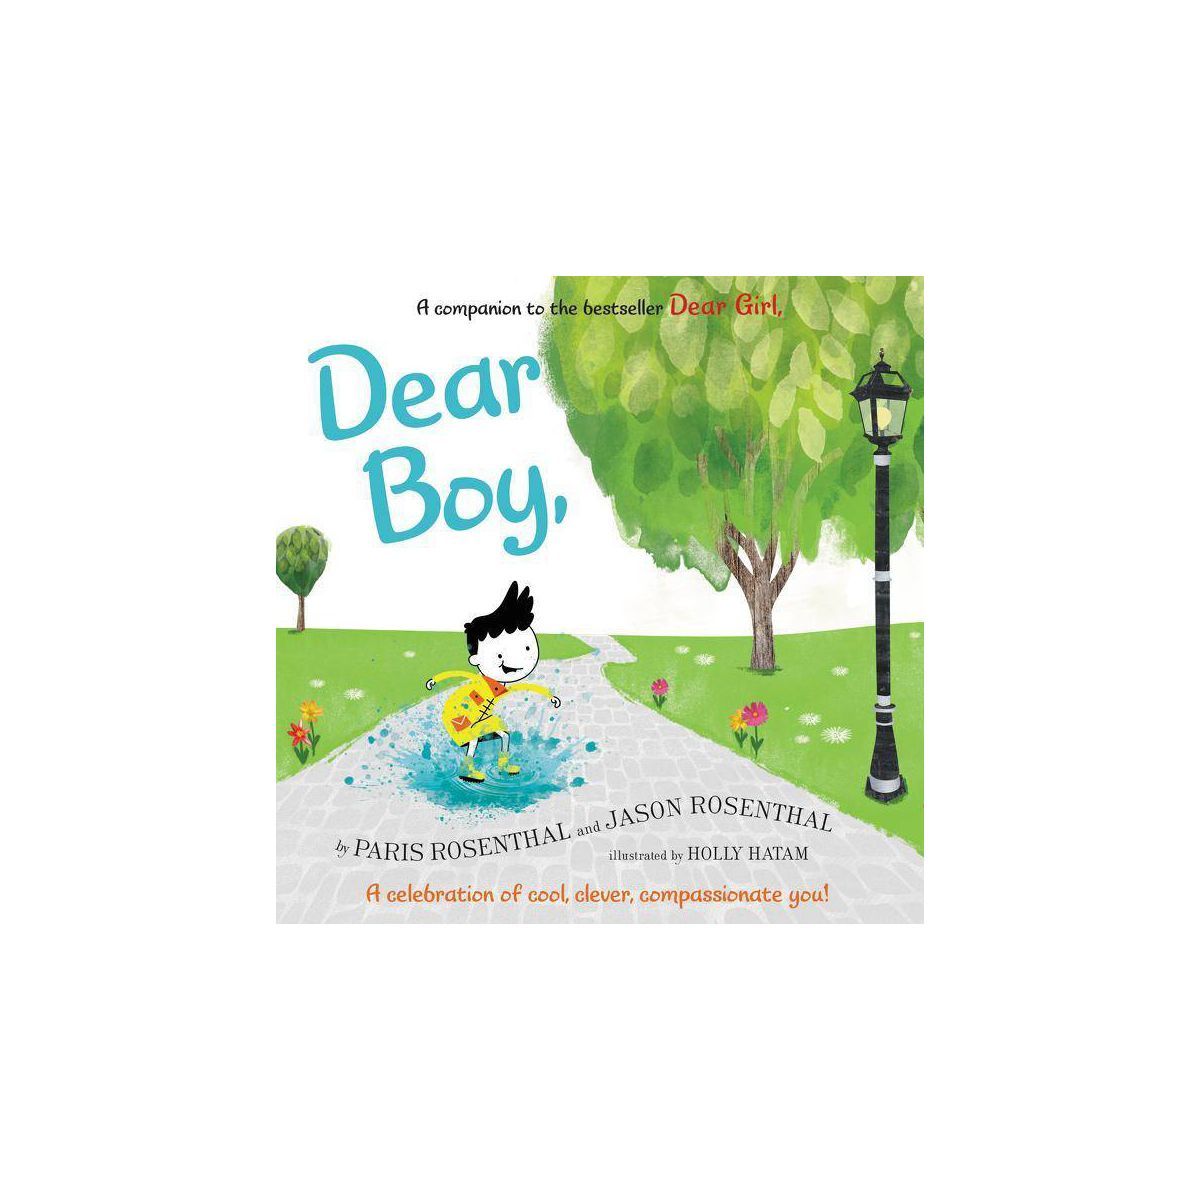 Dear Boy by Jason Rosenthal & Paris Rosenthal (School And Library) | Target